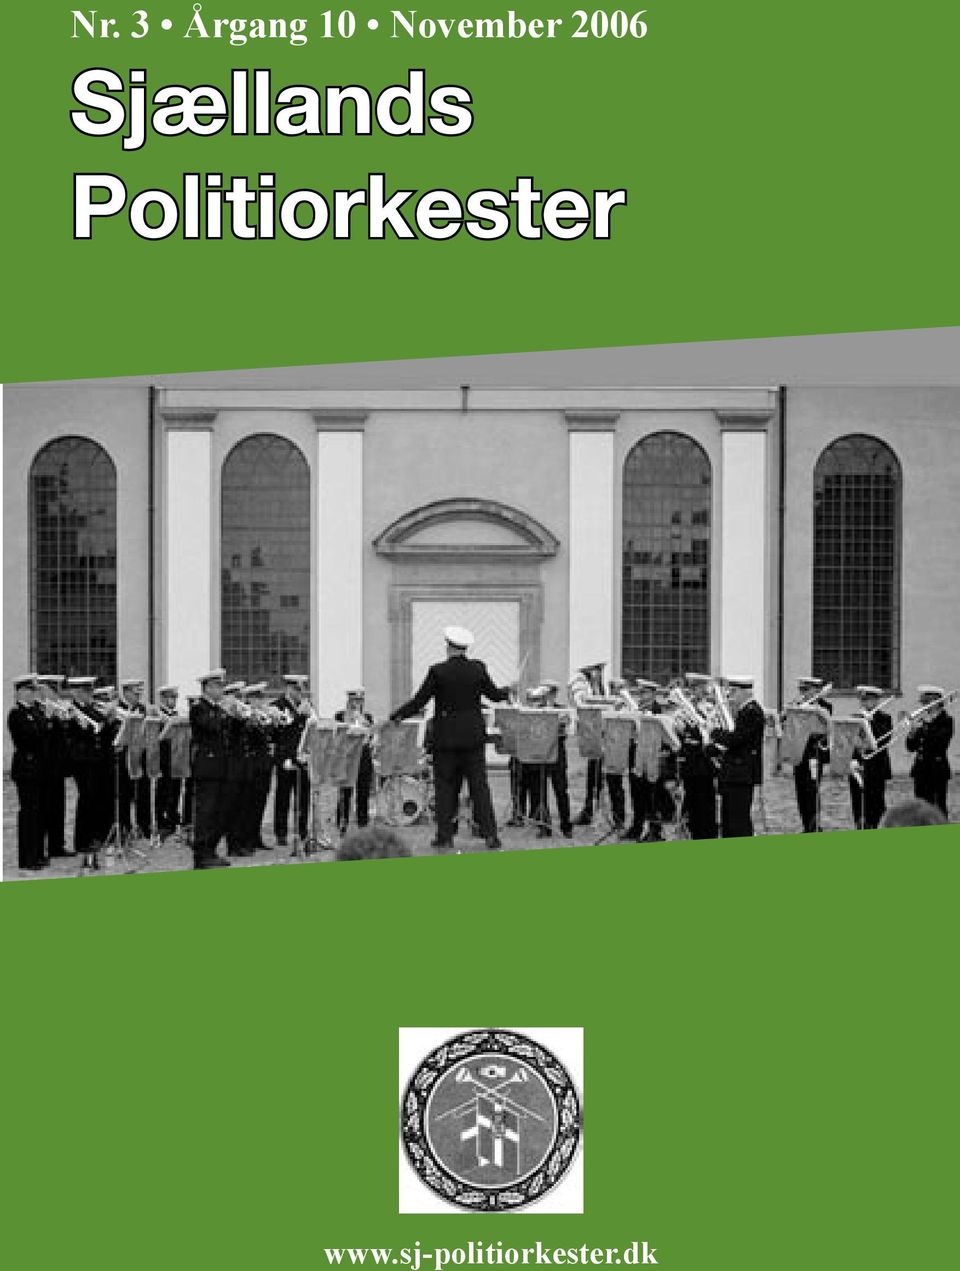 Politiorkester Sjællands